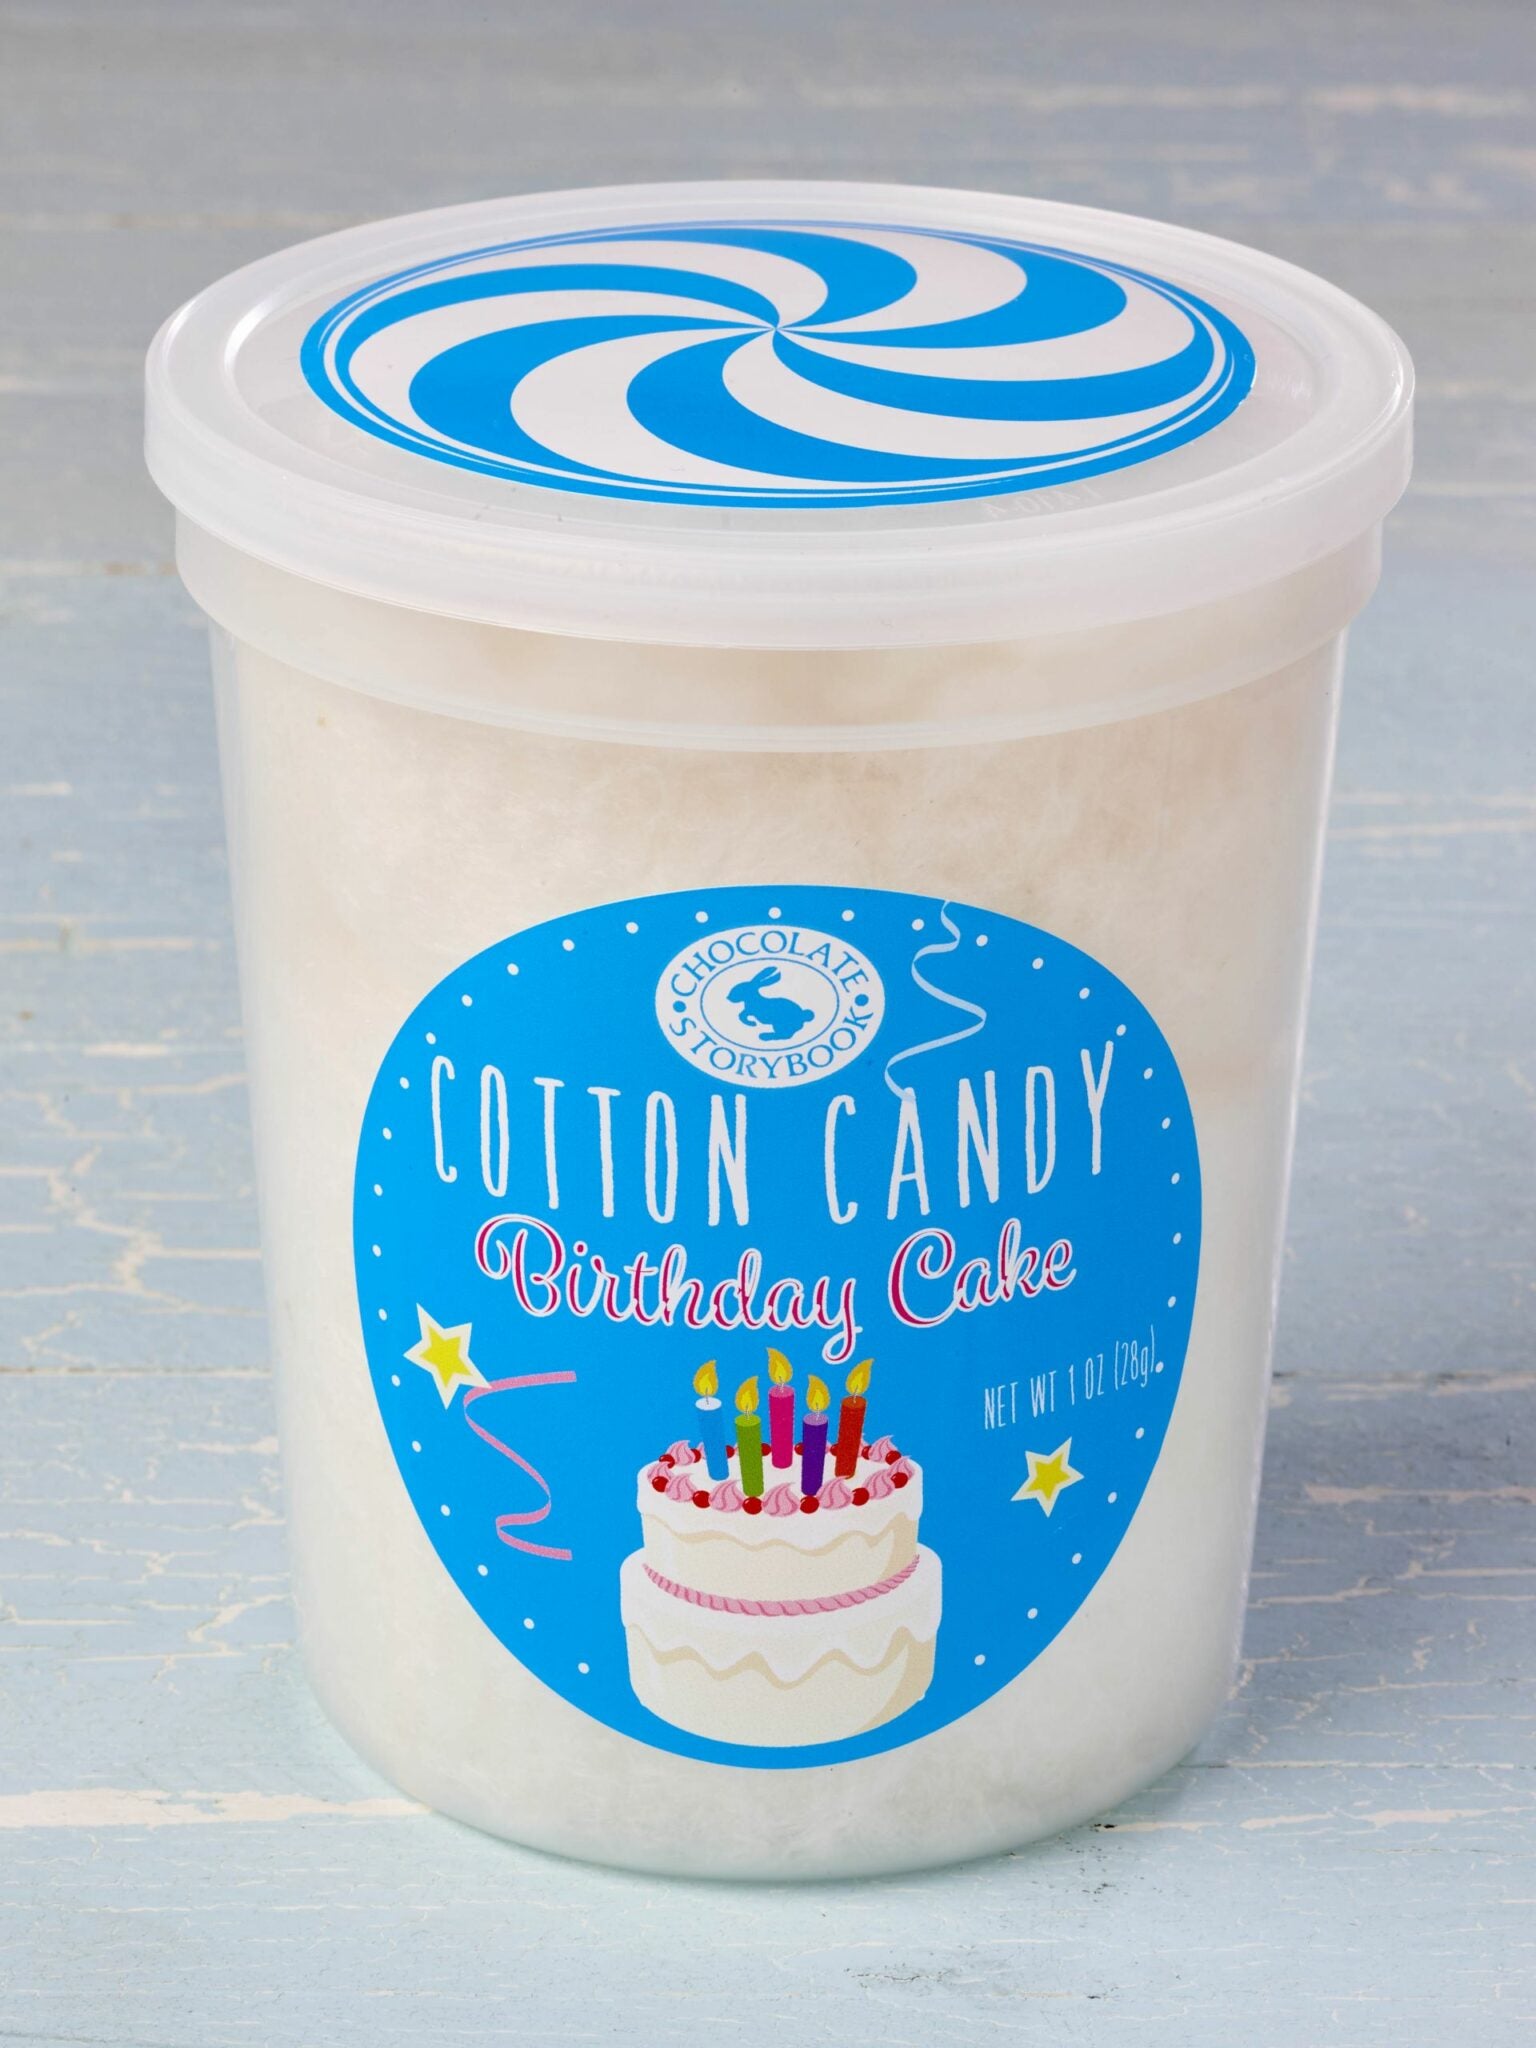 Birthday Cake - Cotton Candy